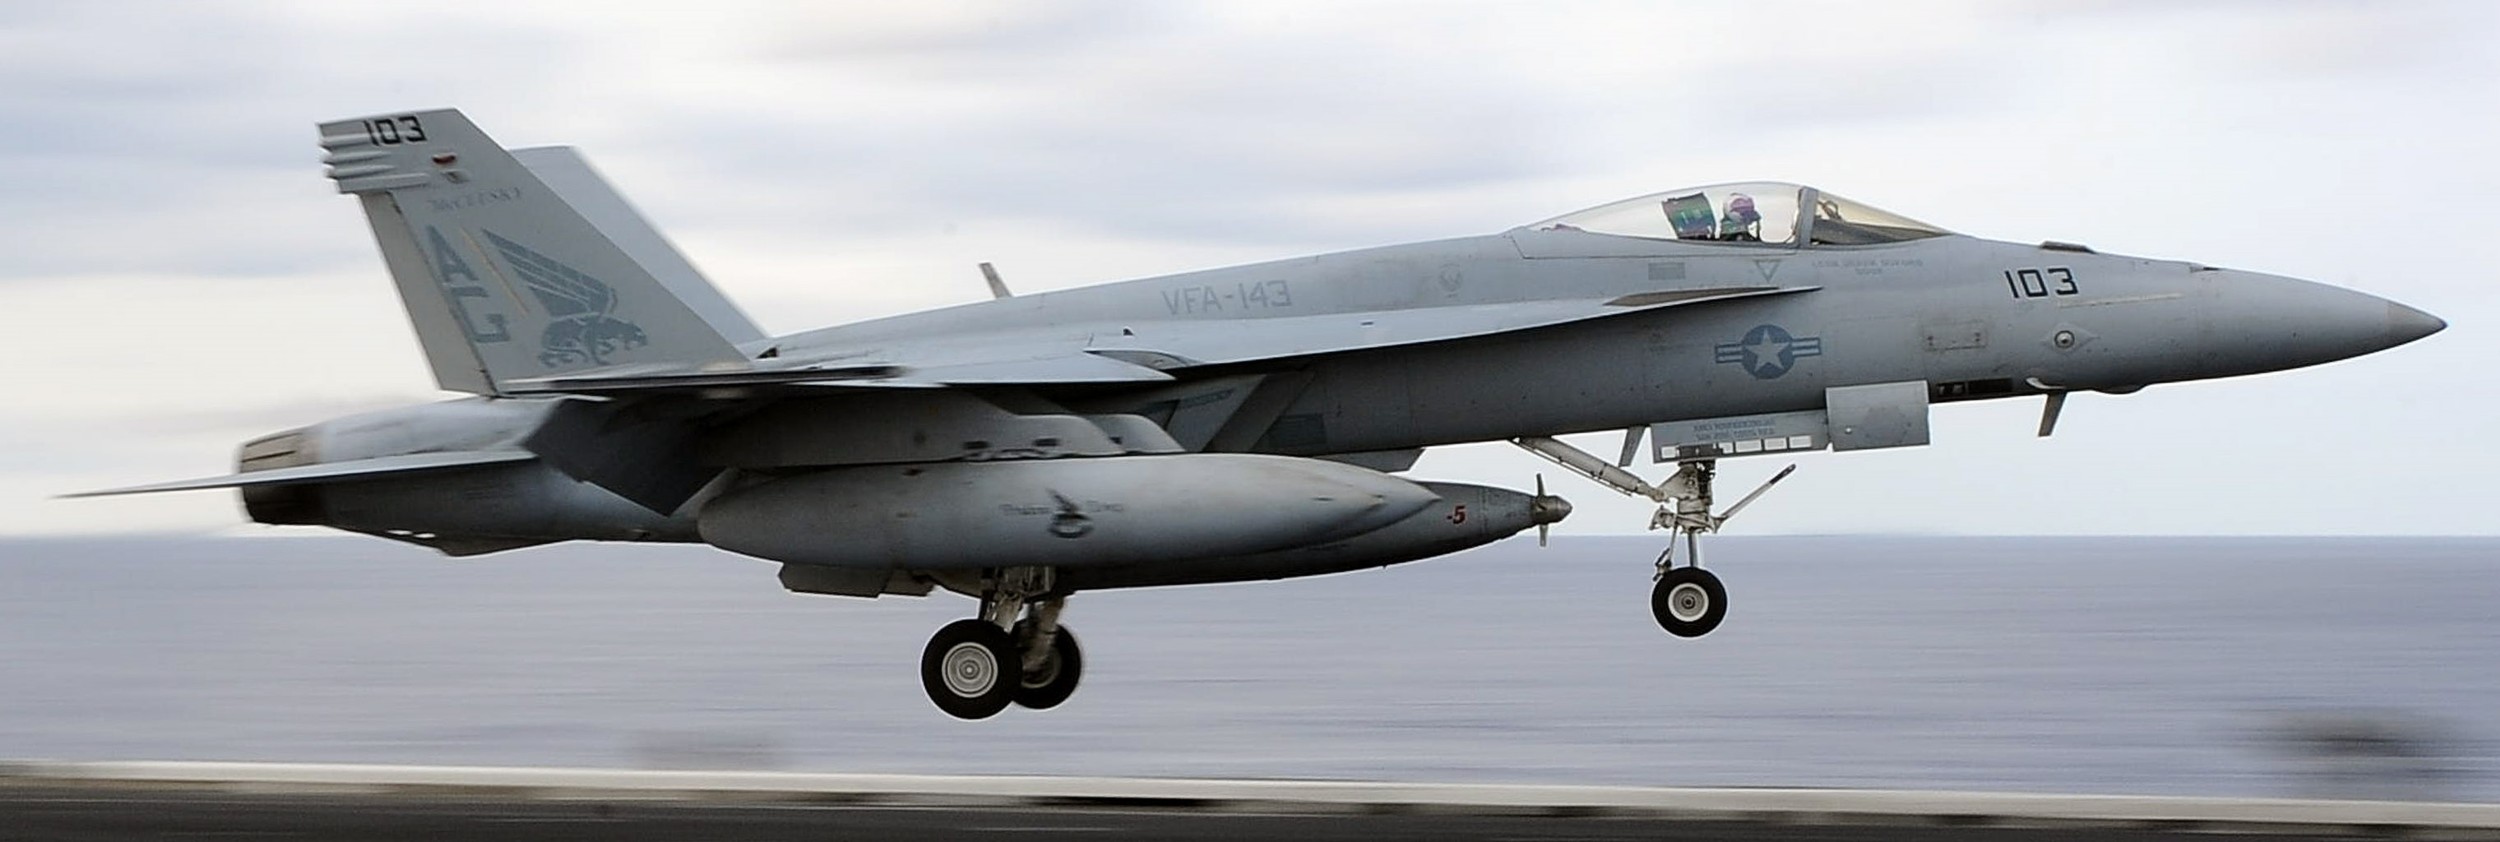 vfa-143 pukin dogs strike fighter squadron f/a-18e super hornet cvw-7 uss dwight d. eisenhower cvn-69 2012 35